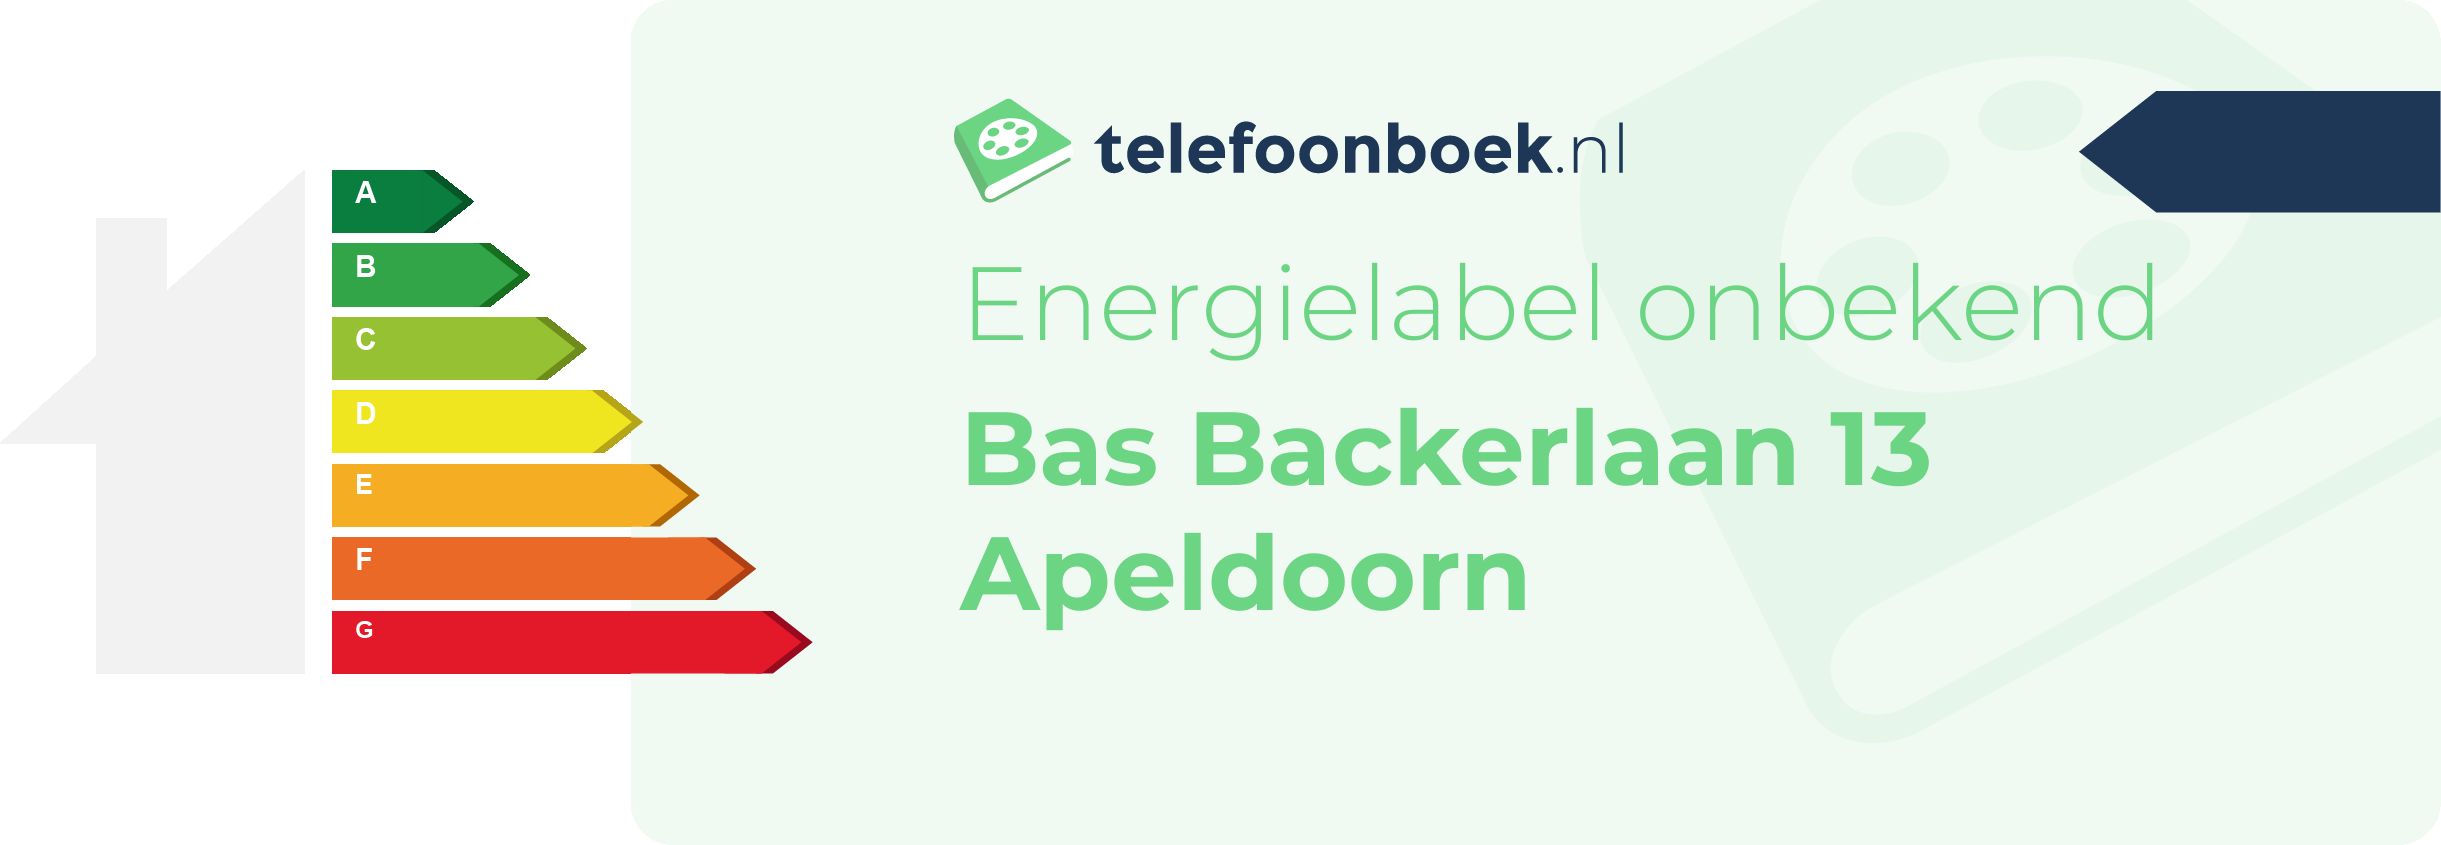 Energielabel Bas Backerlaan 13 Apeldoorn